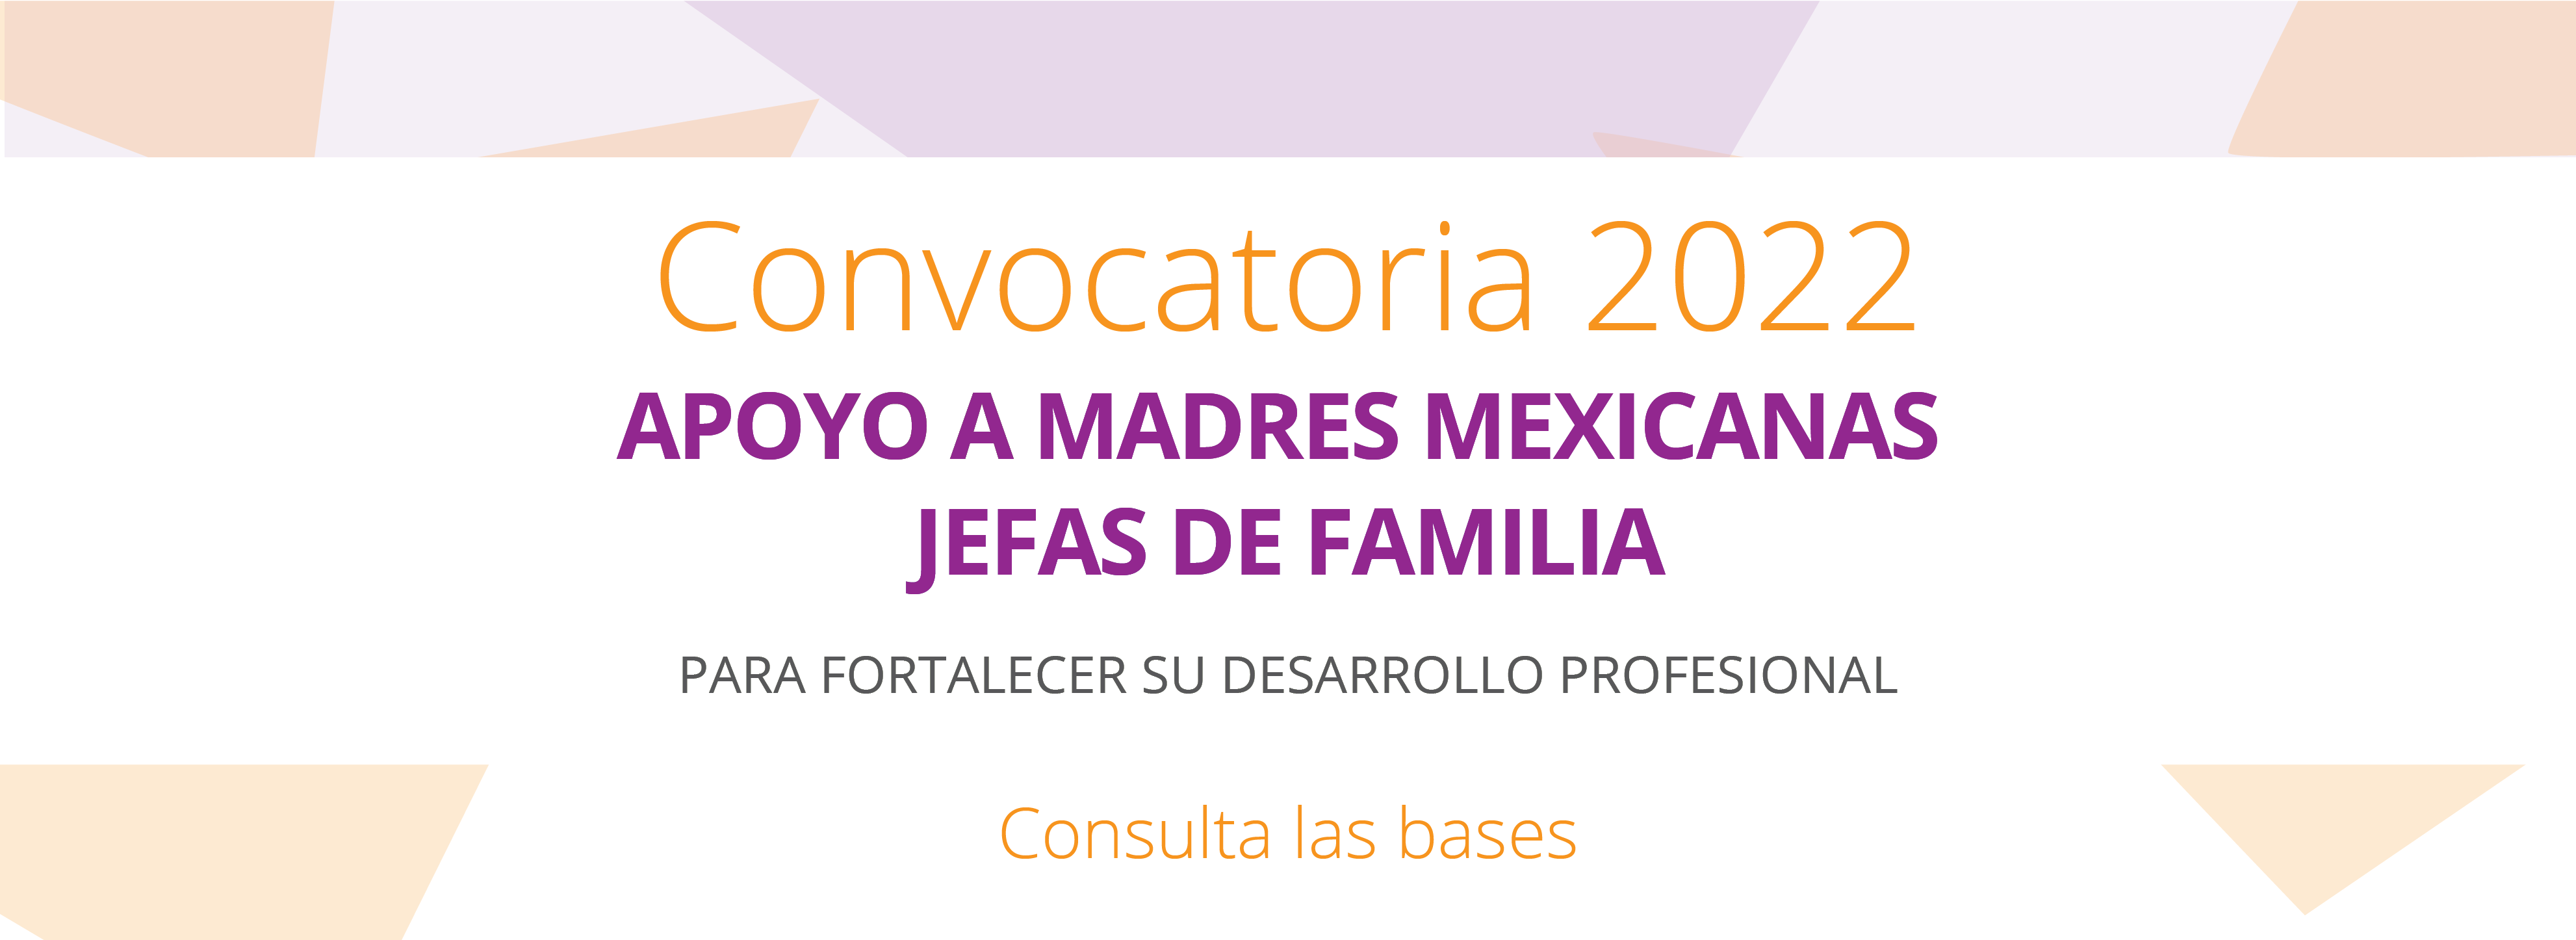 Convocatoria_apoyo_a_madres_2022_banner_web_1